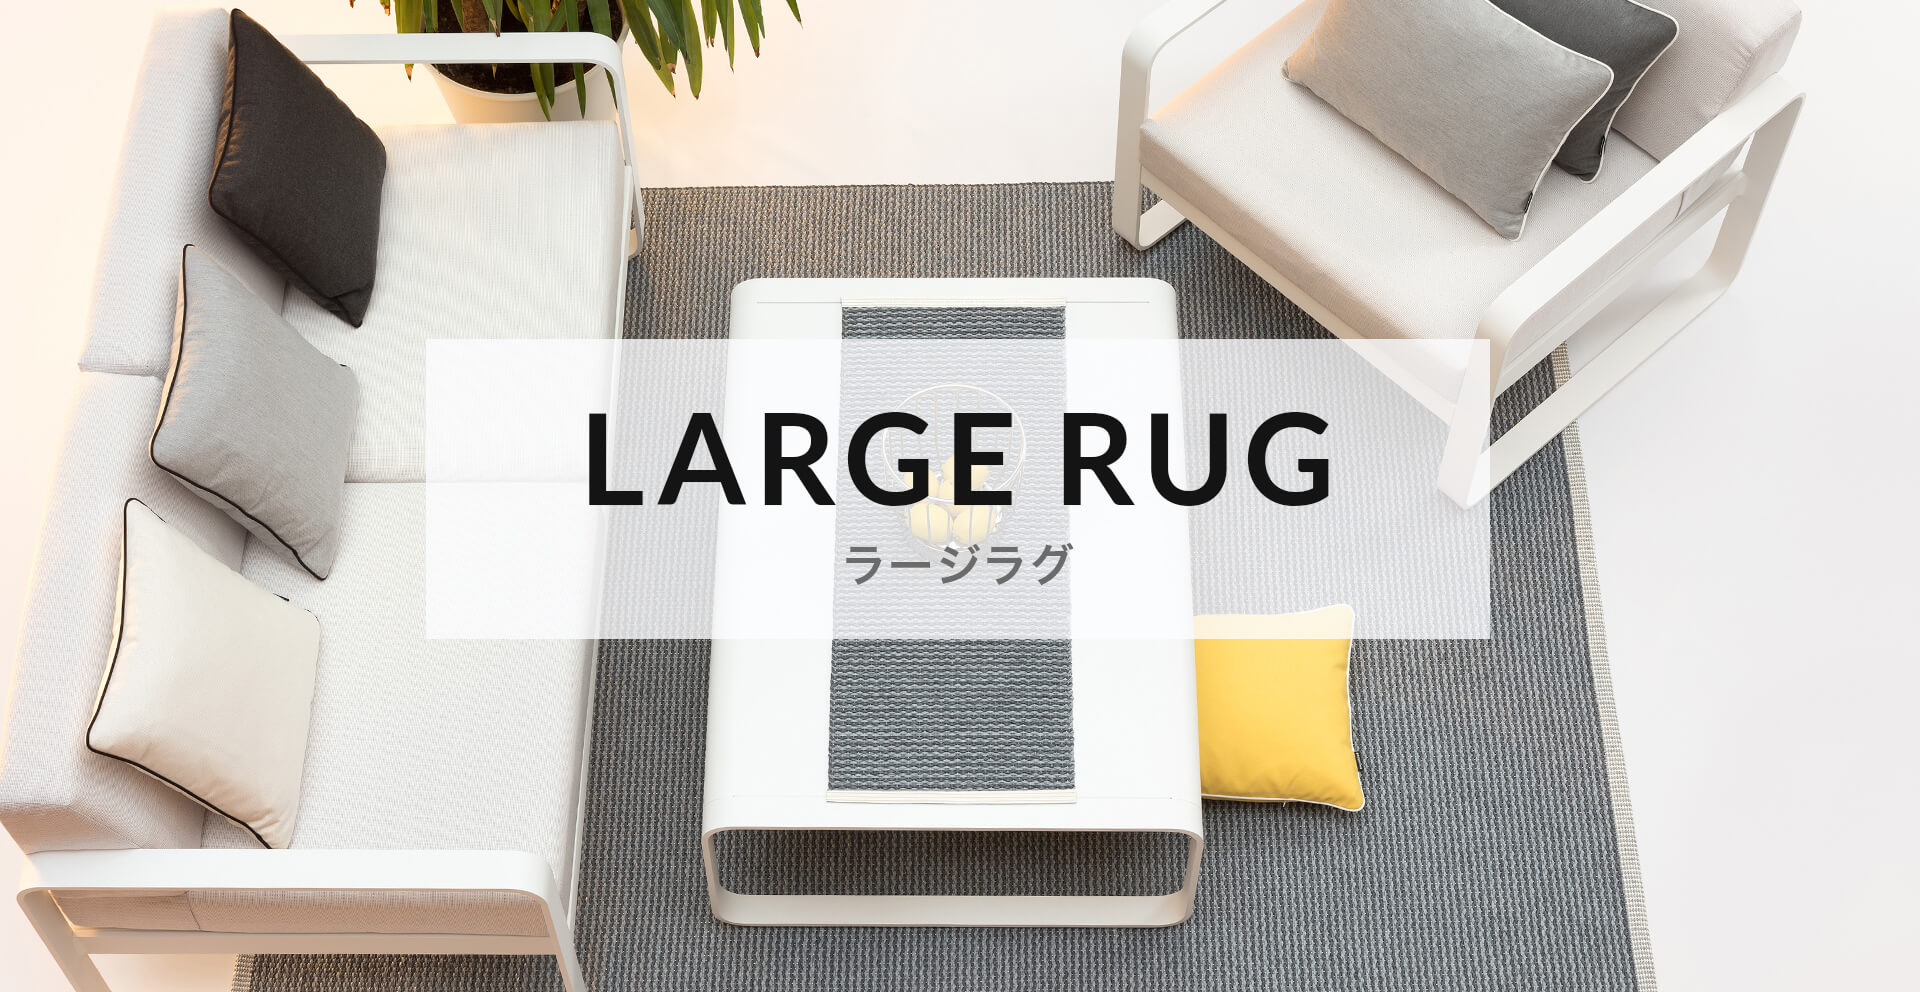 Large Rug